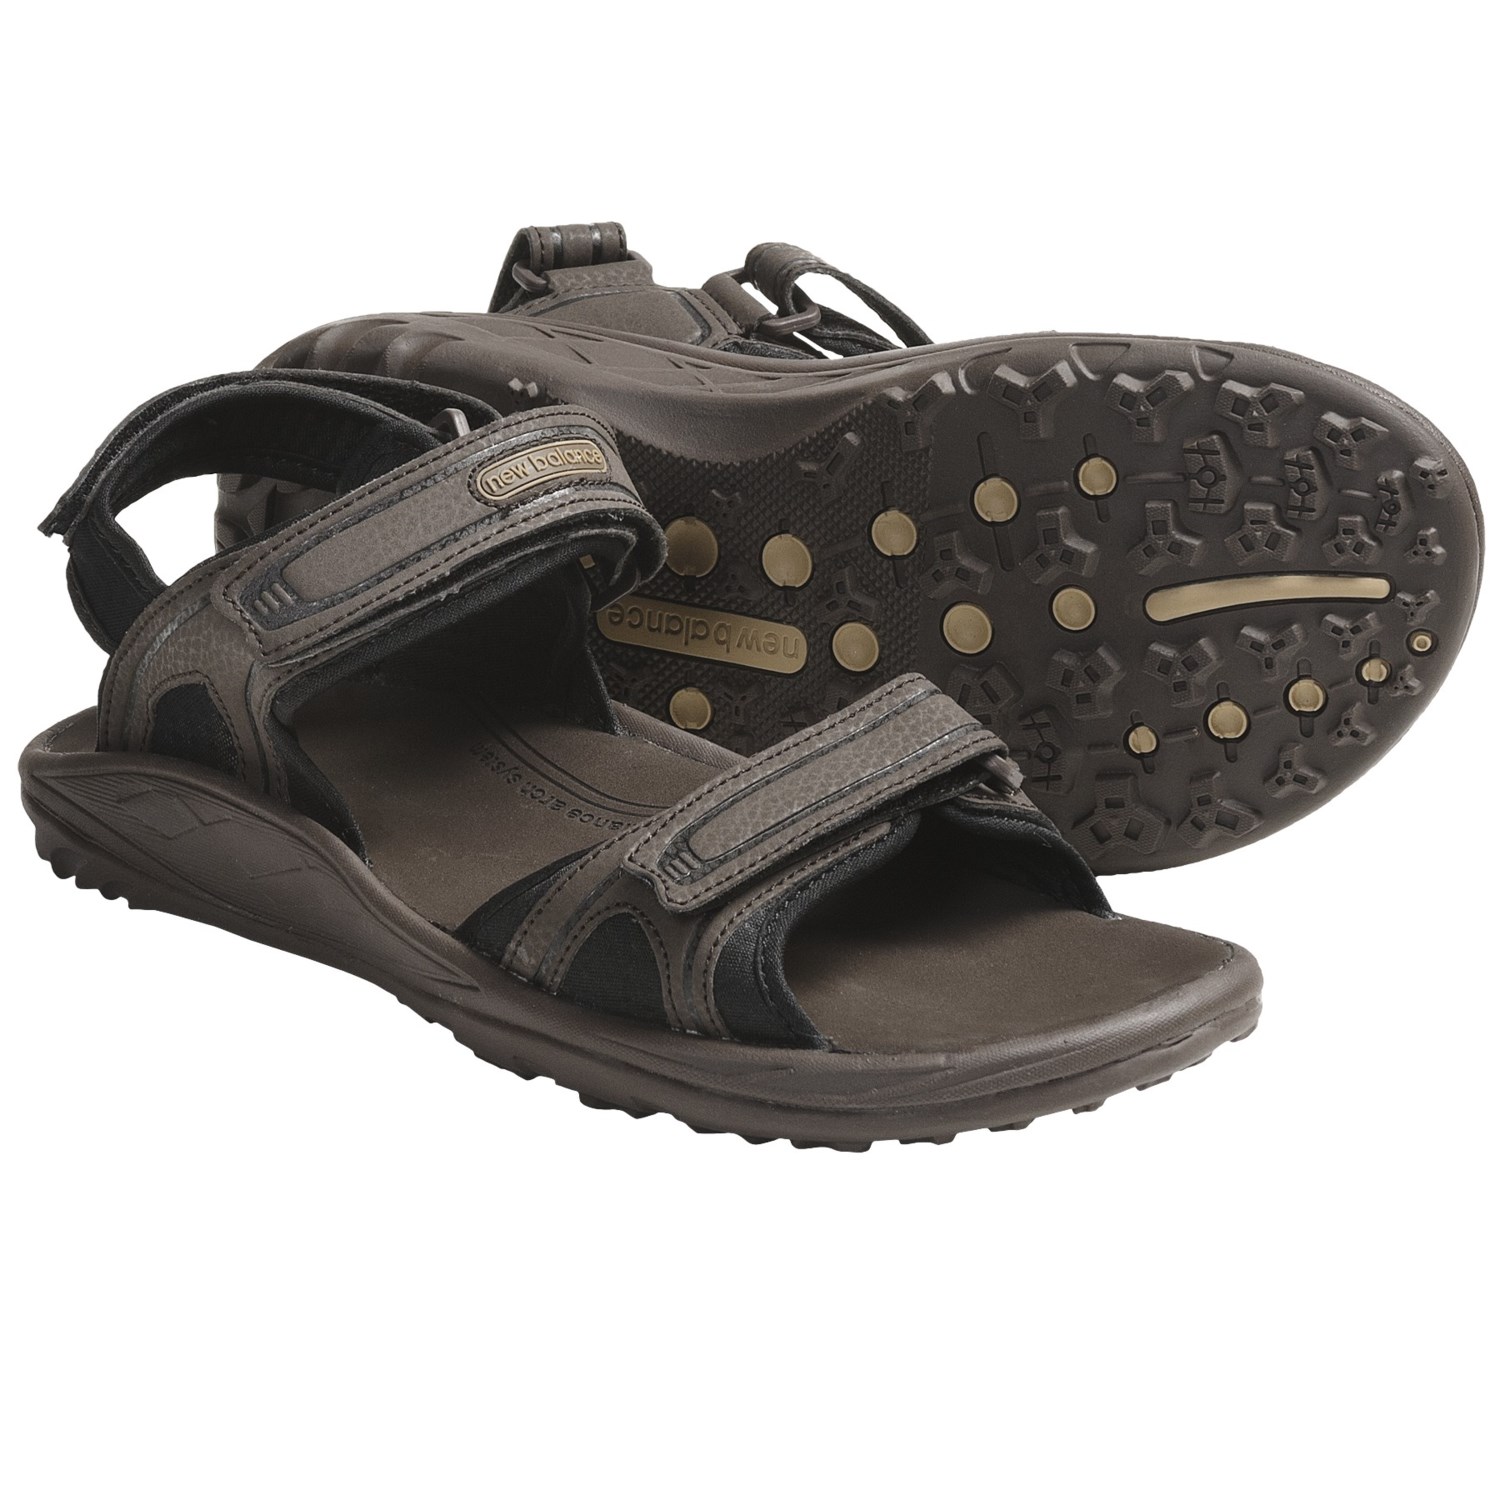 New Balance Mad River Sport Sandals (For Men) - Save 36%